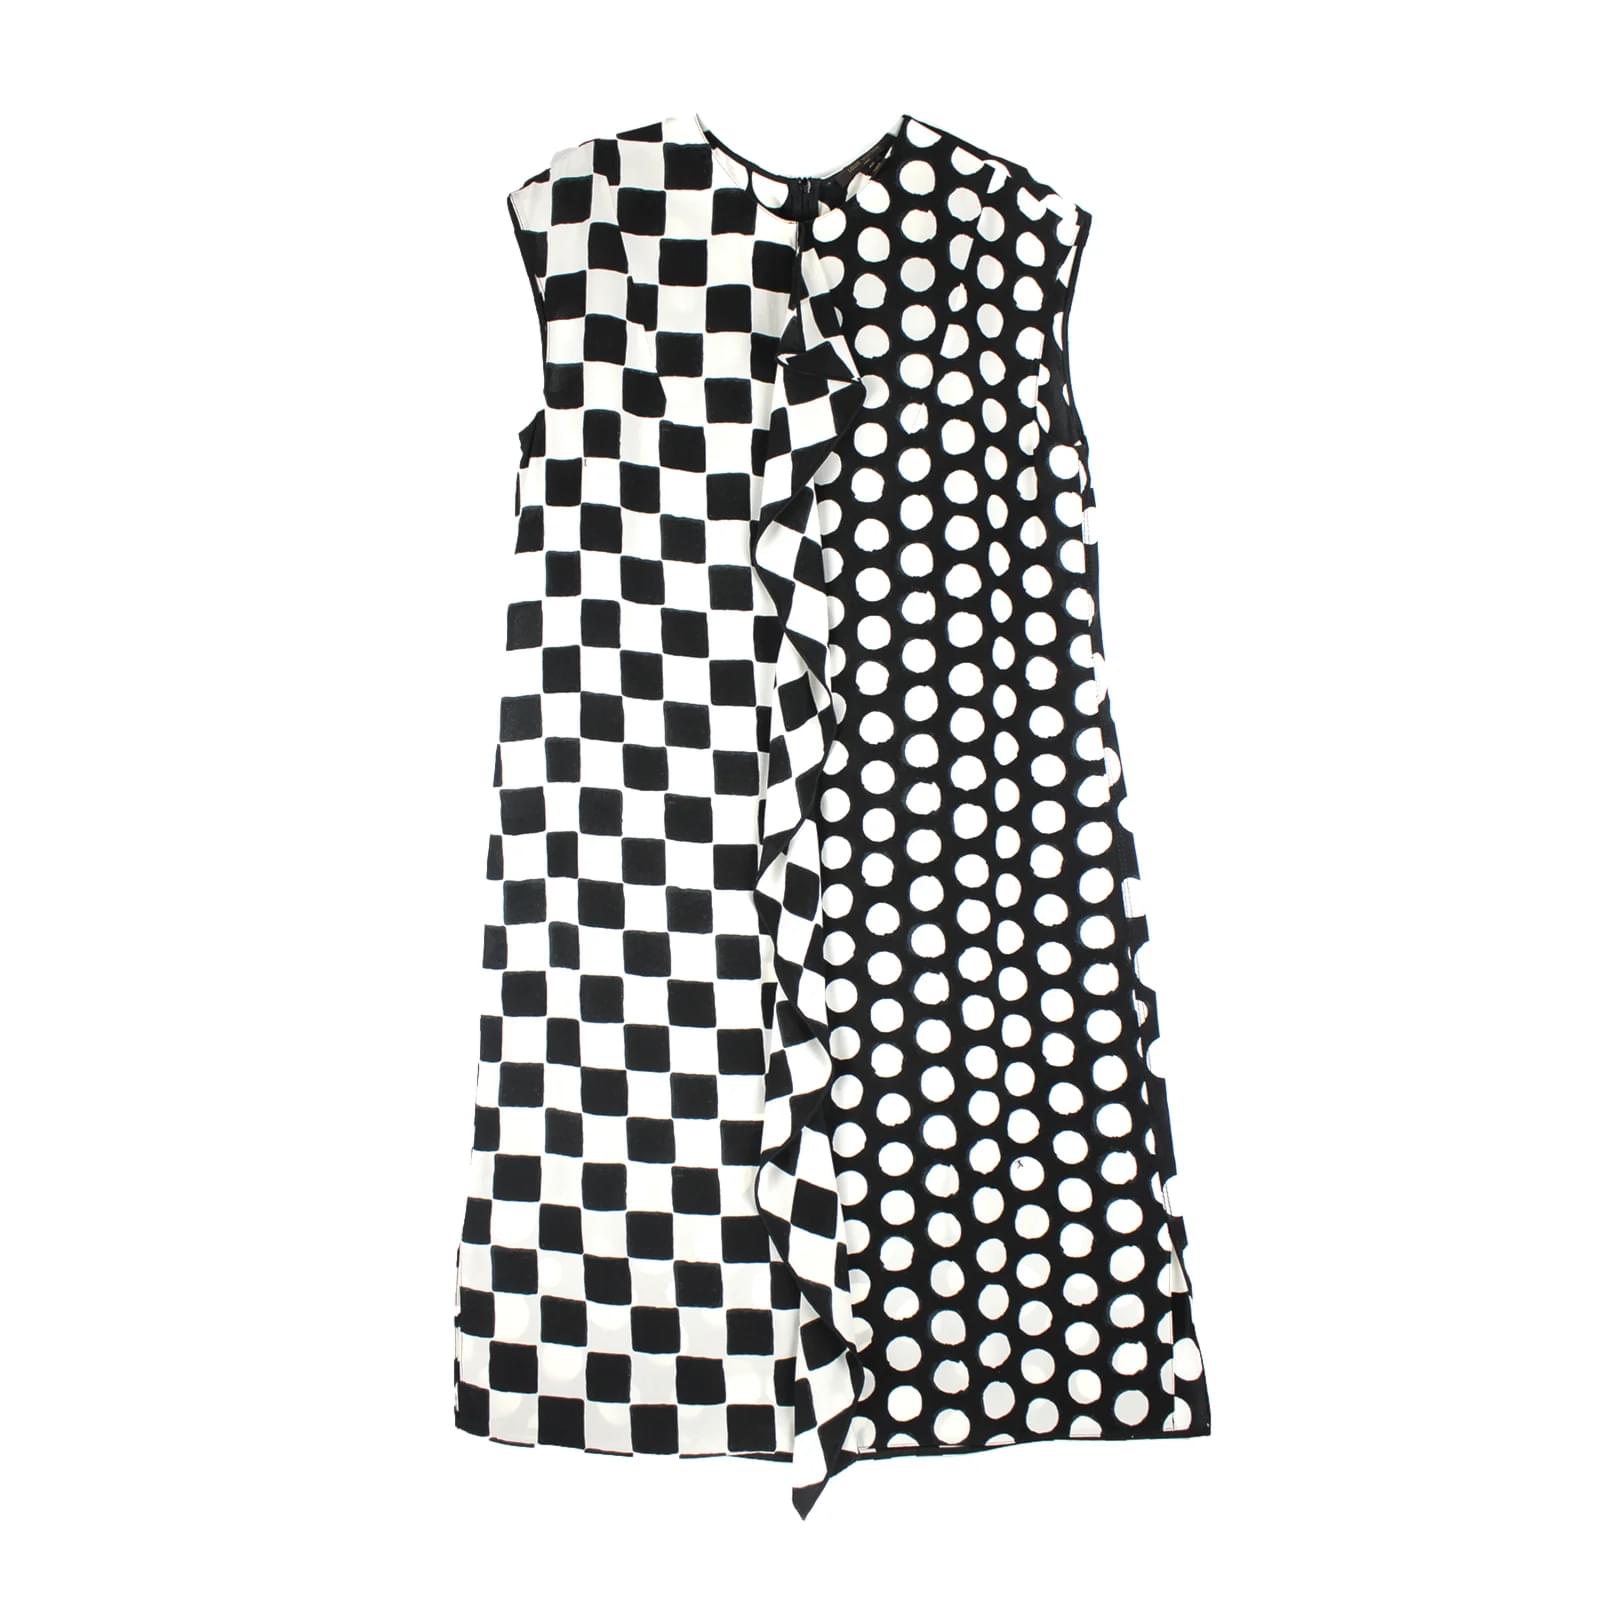 Louis Vuitton black Monogram Chambray Short-Sleeve Shirt